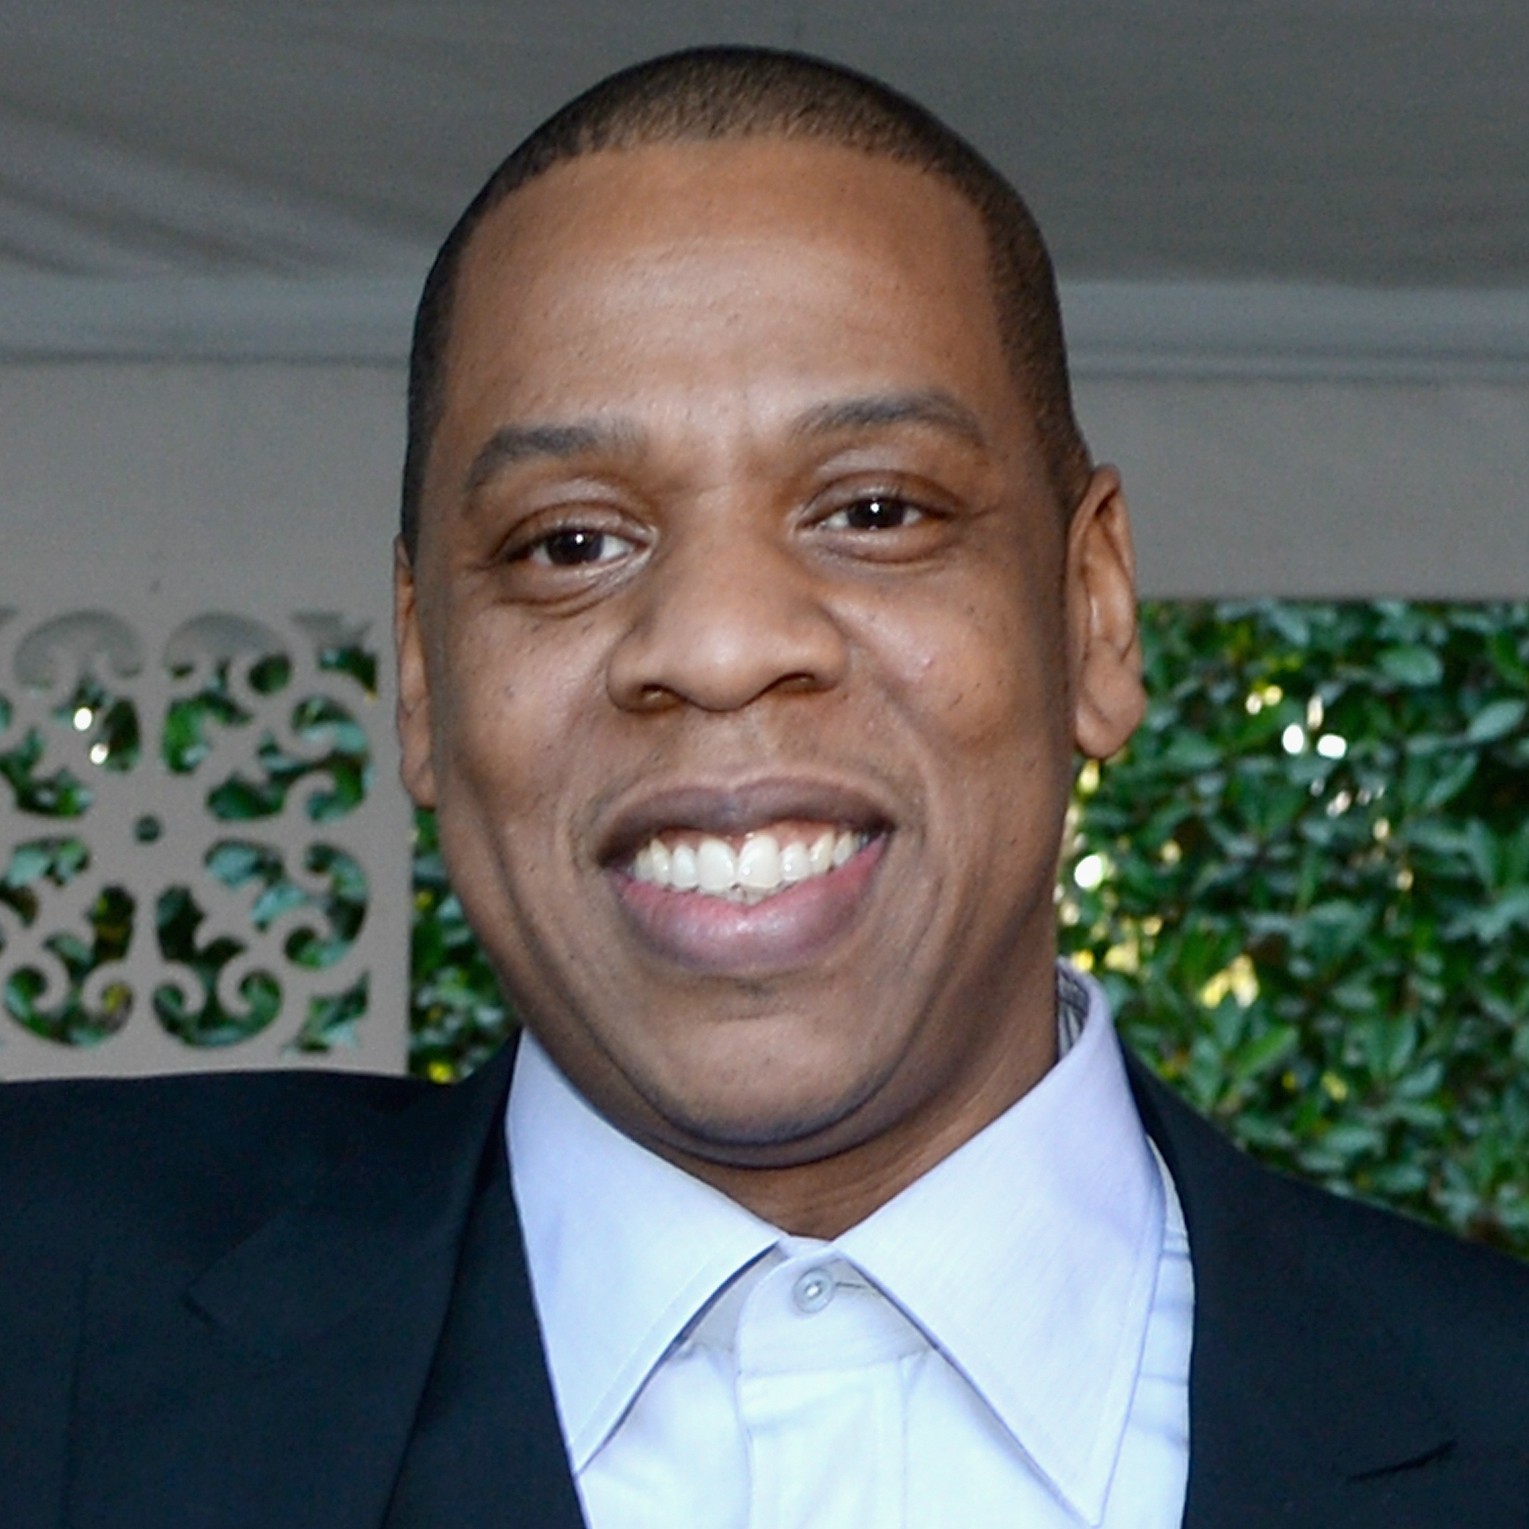 O rapper Jay-Z na verdade se chama Shawn Corey Carter. (Foto: Getty Images)